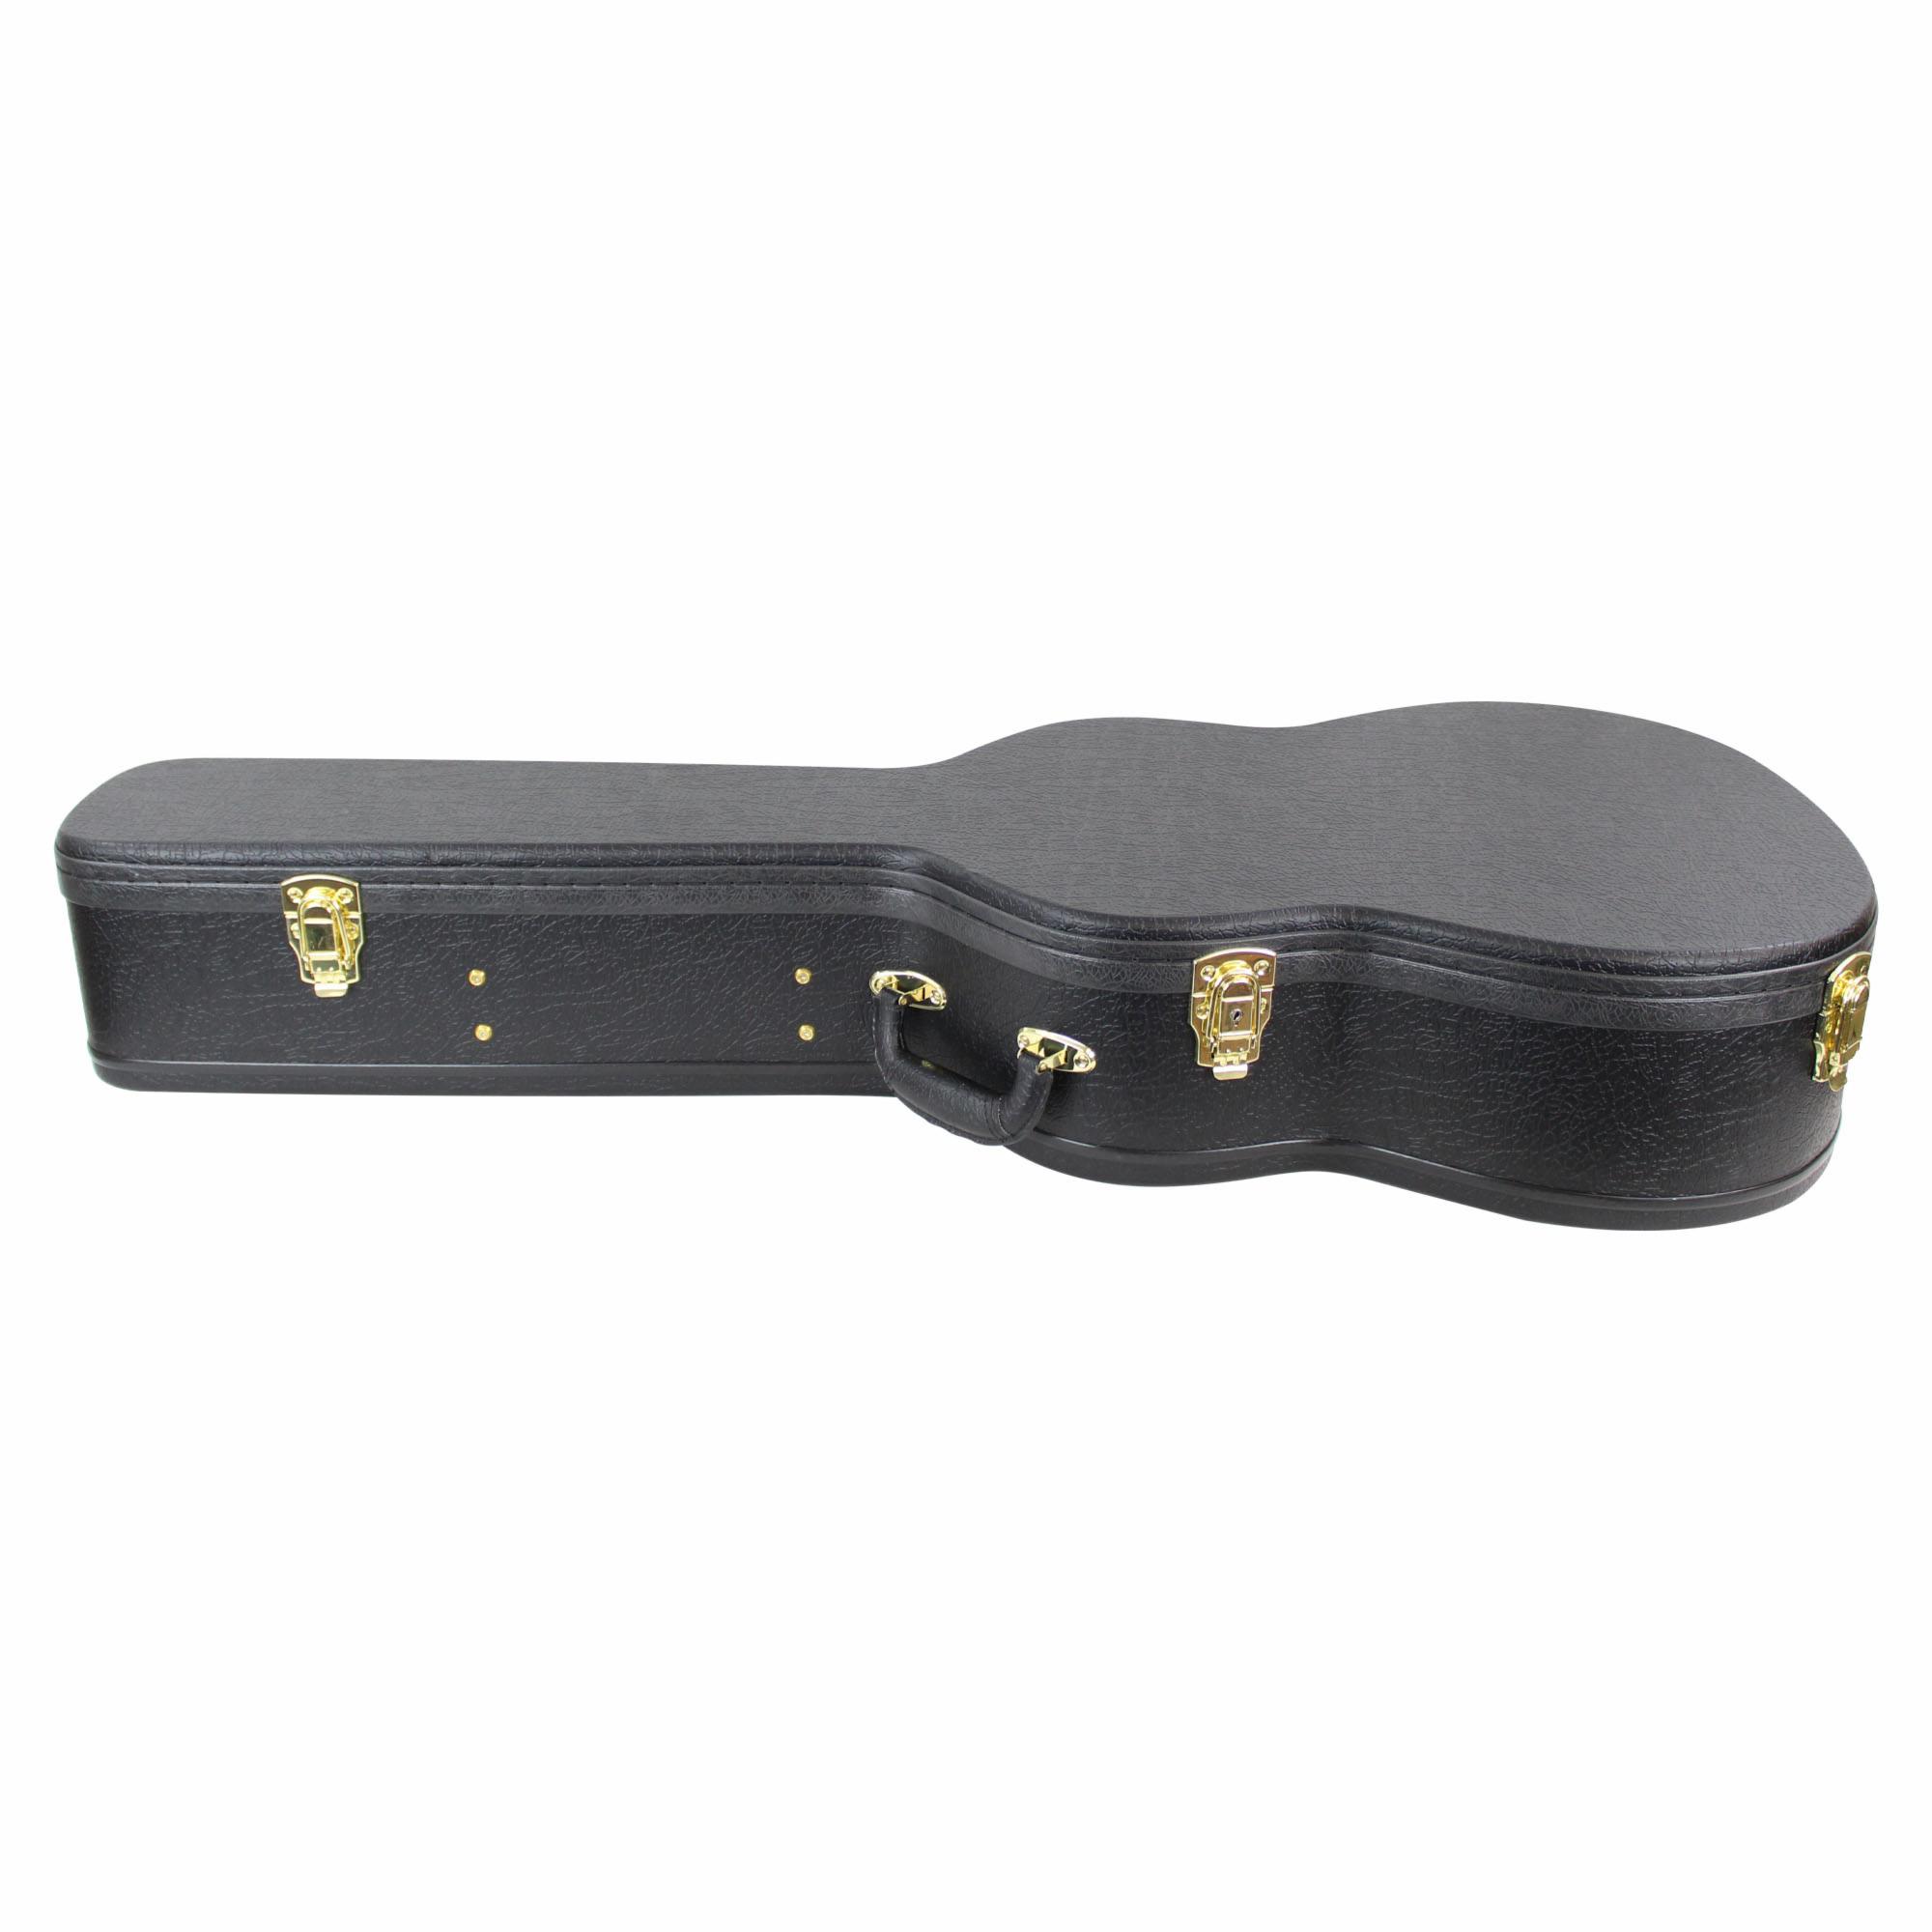 Yamaha CG Series Hardshell Guitar Case